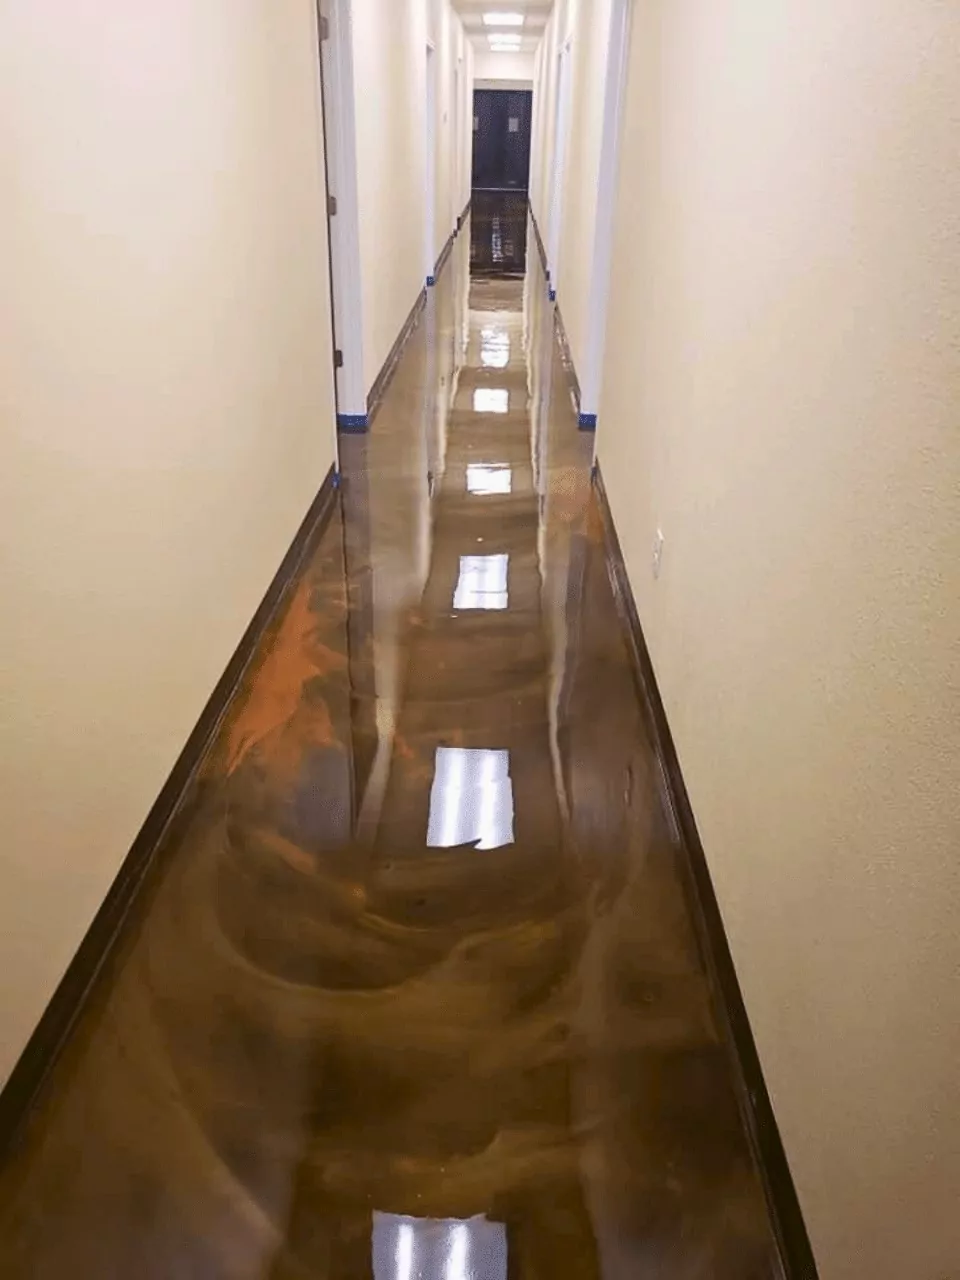 Brown, metallic epoxy, commercial floor coating, office hallway by Decorative Concrete of Texas - Commercial Floor Coatings Project